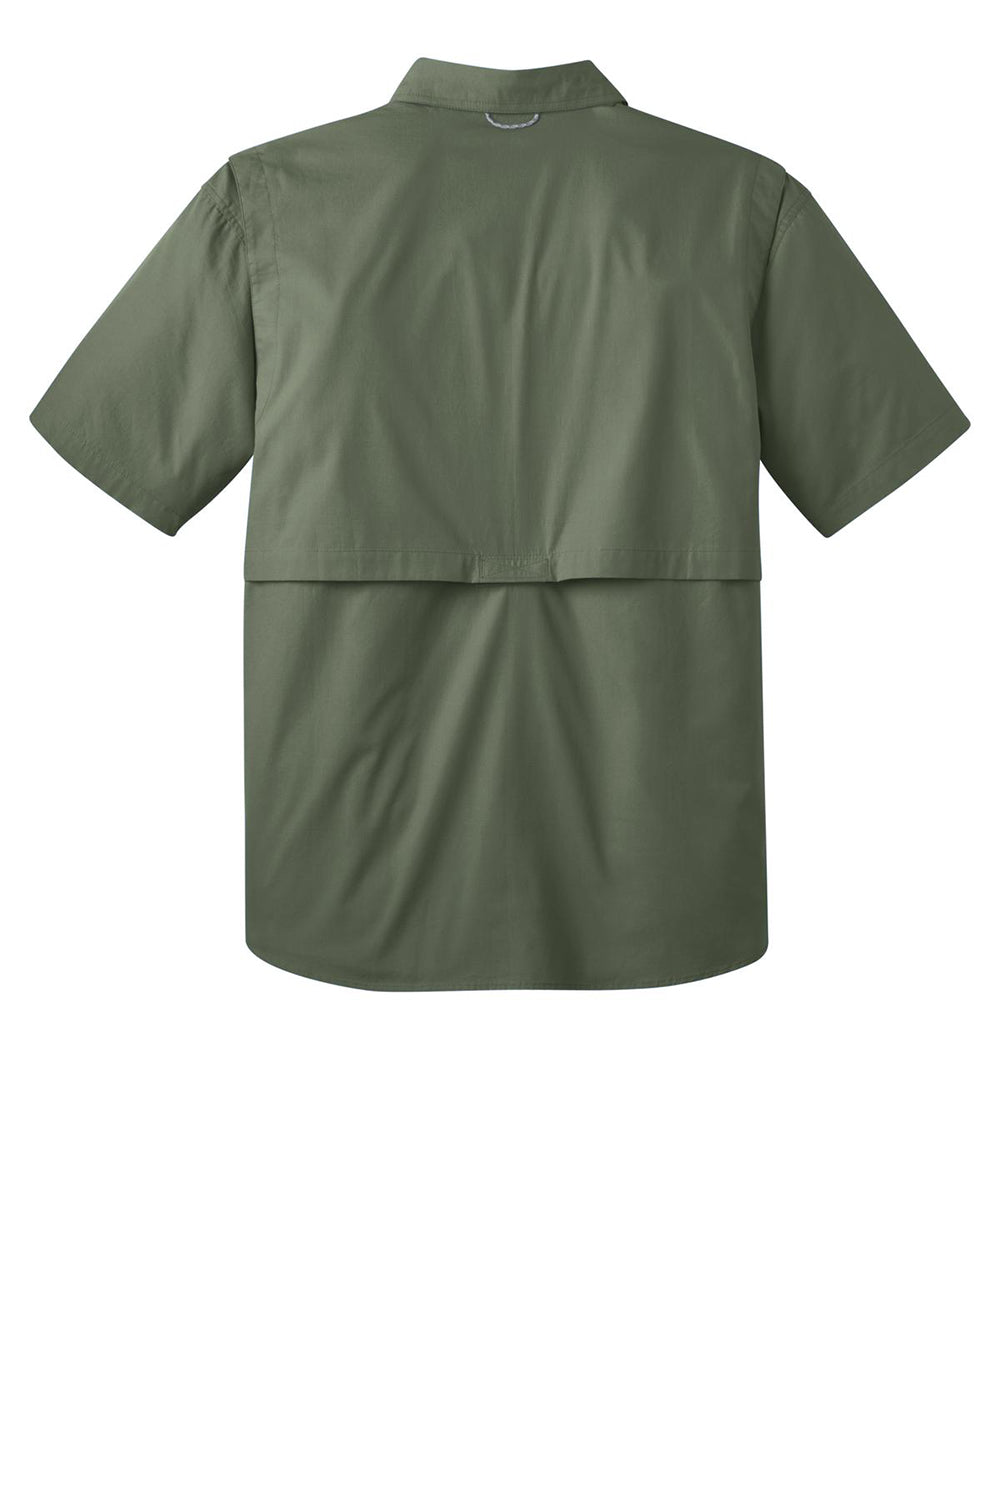 Eddie Bauer EB608 Mens Fishing Short Sleeve Button Down Shirt w/ Double Pockets Seagrass Green Flat Back